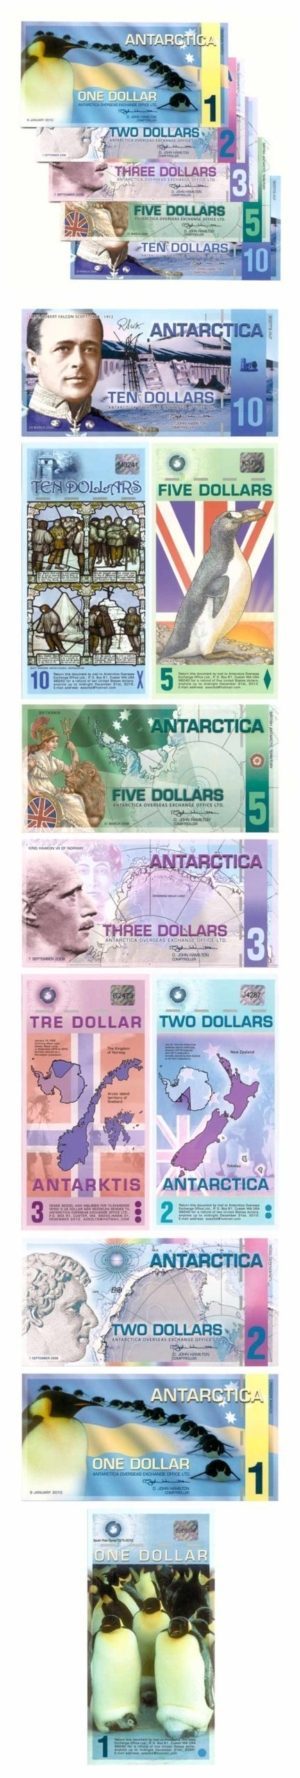 Antarctica - Polymer Banknote Set - $1